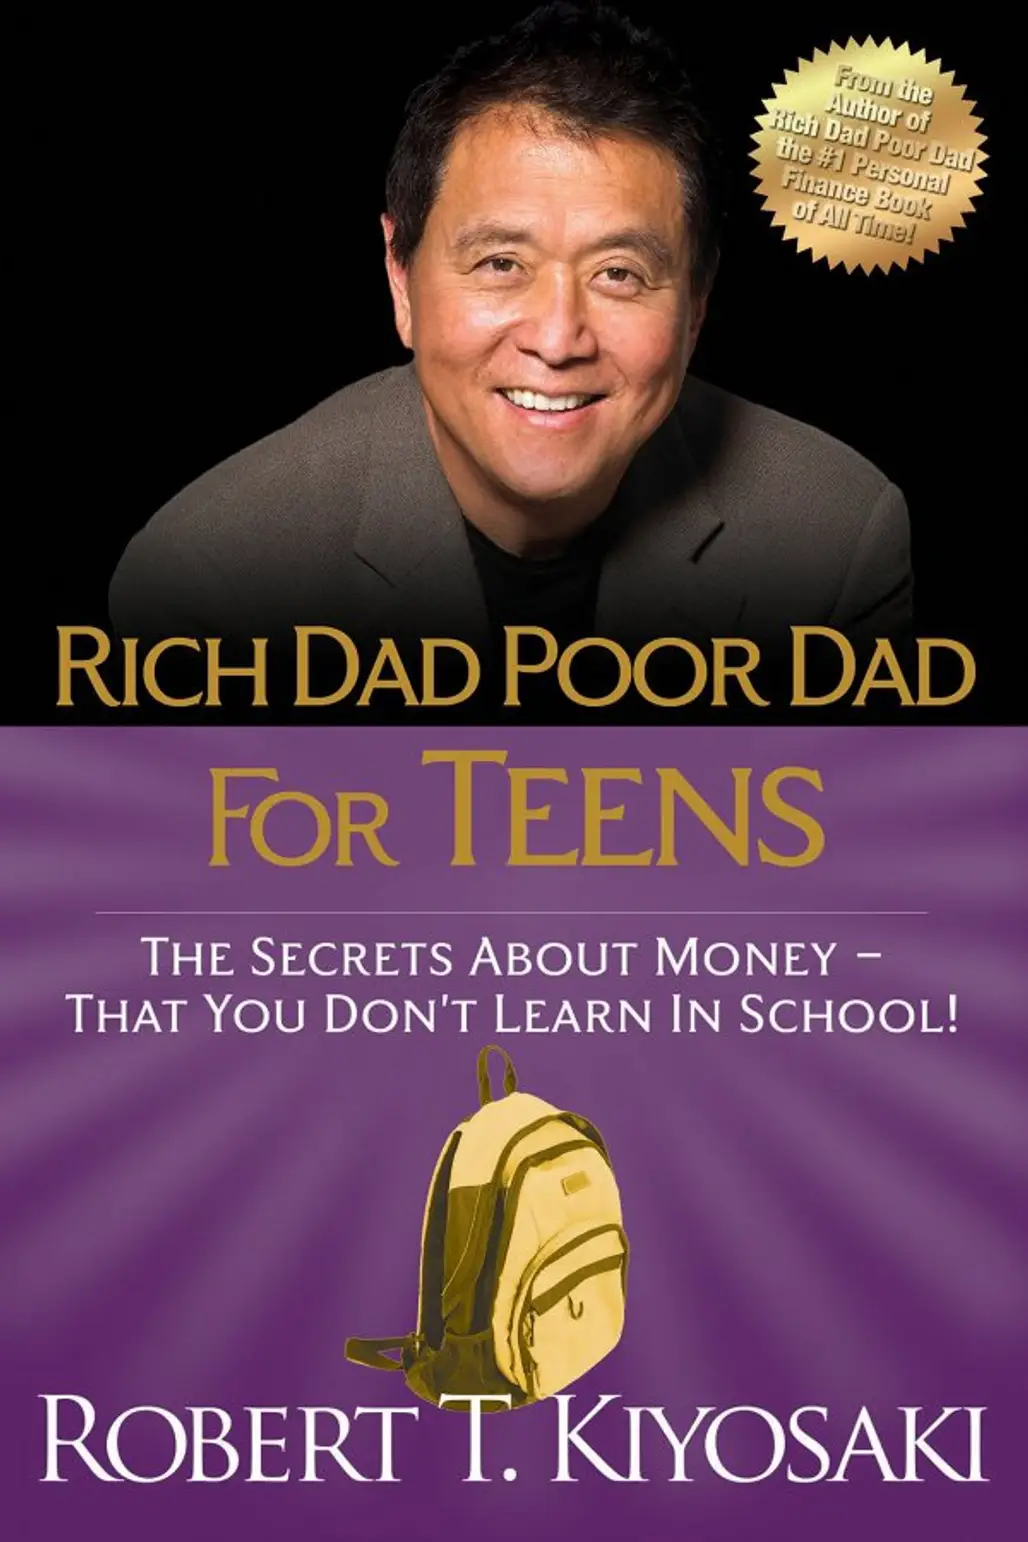 Rich Dad Poor Dad for Teens by Robert T. Kiyosaki 